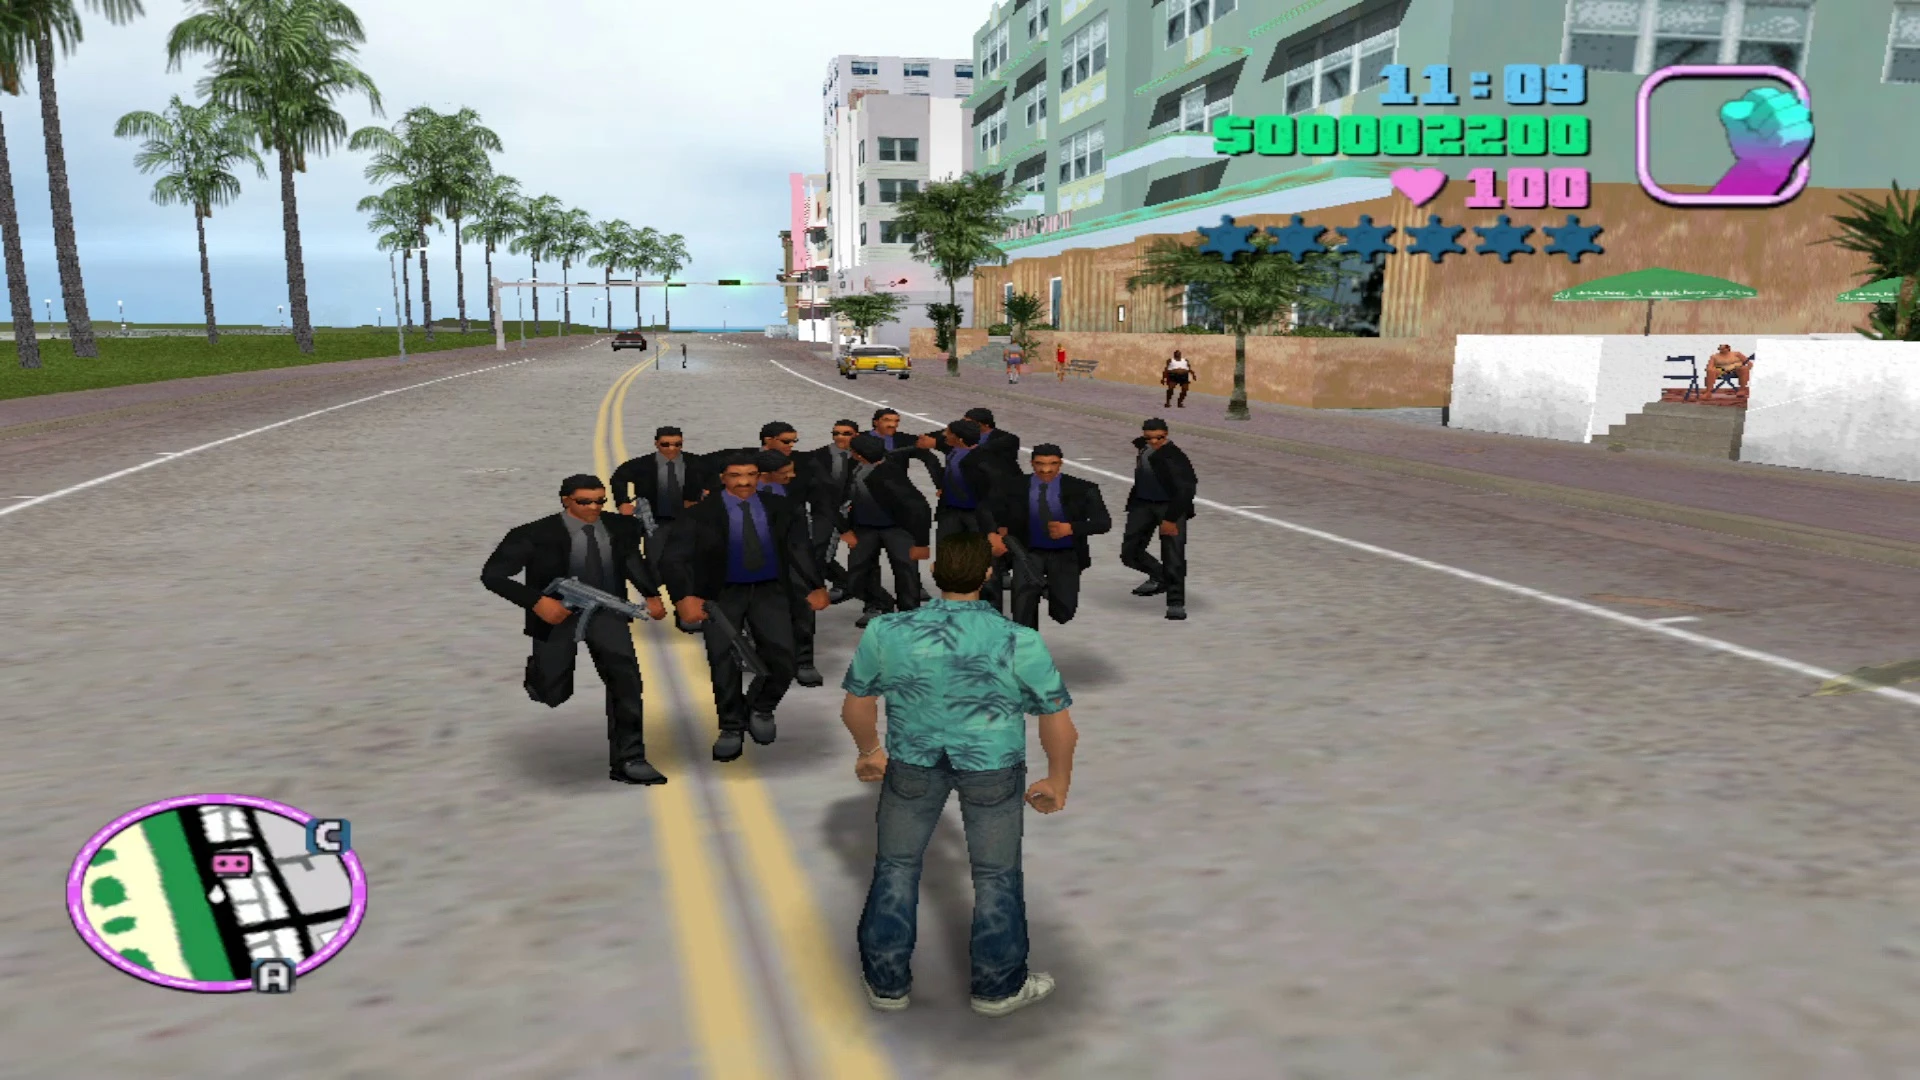 Black suit bodyguard [Grand Theft Auto: Vice City] [Mods]